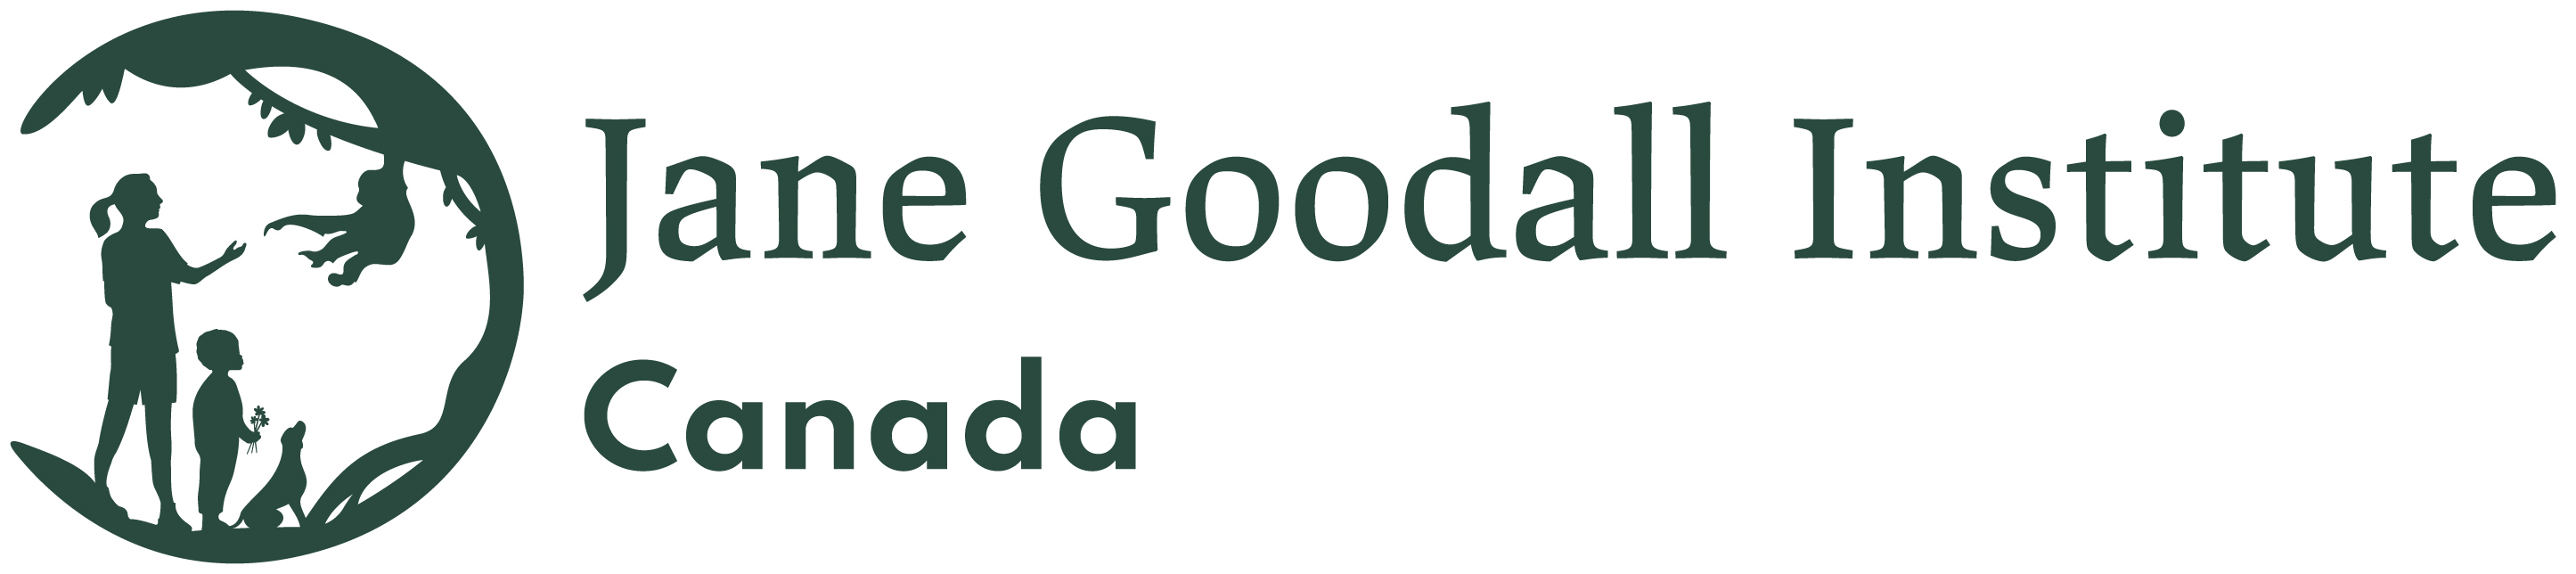 jane goodall institute canada logo